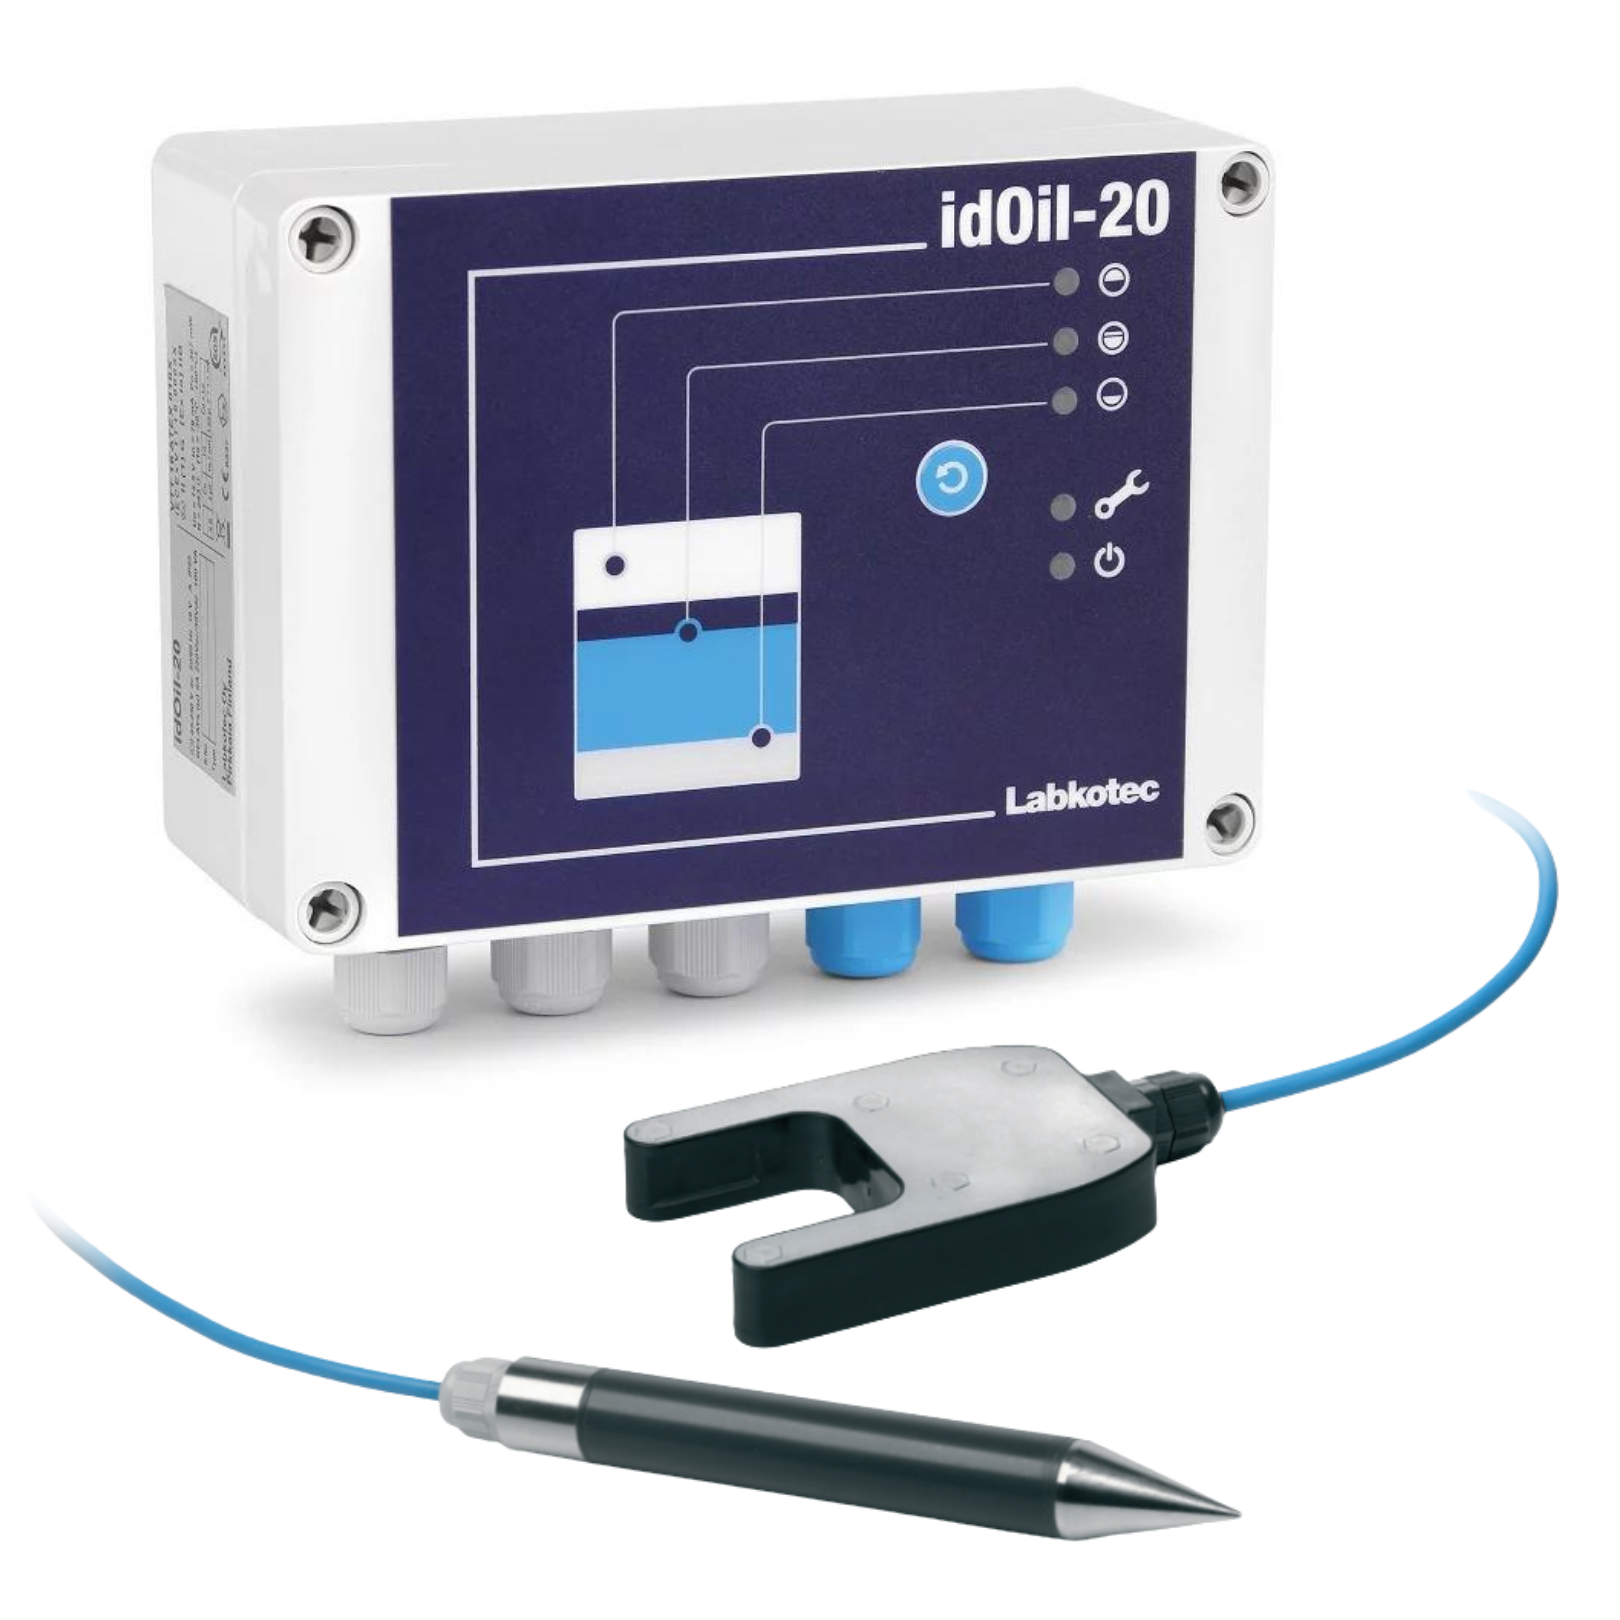 Labkotec idOil-20 with Oil and Sludge Sensor